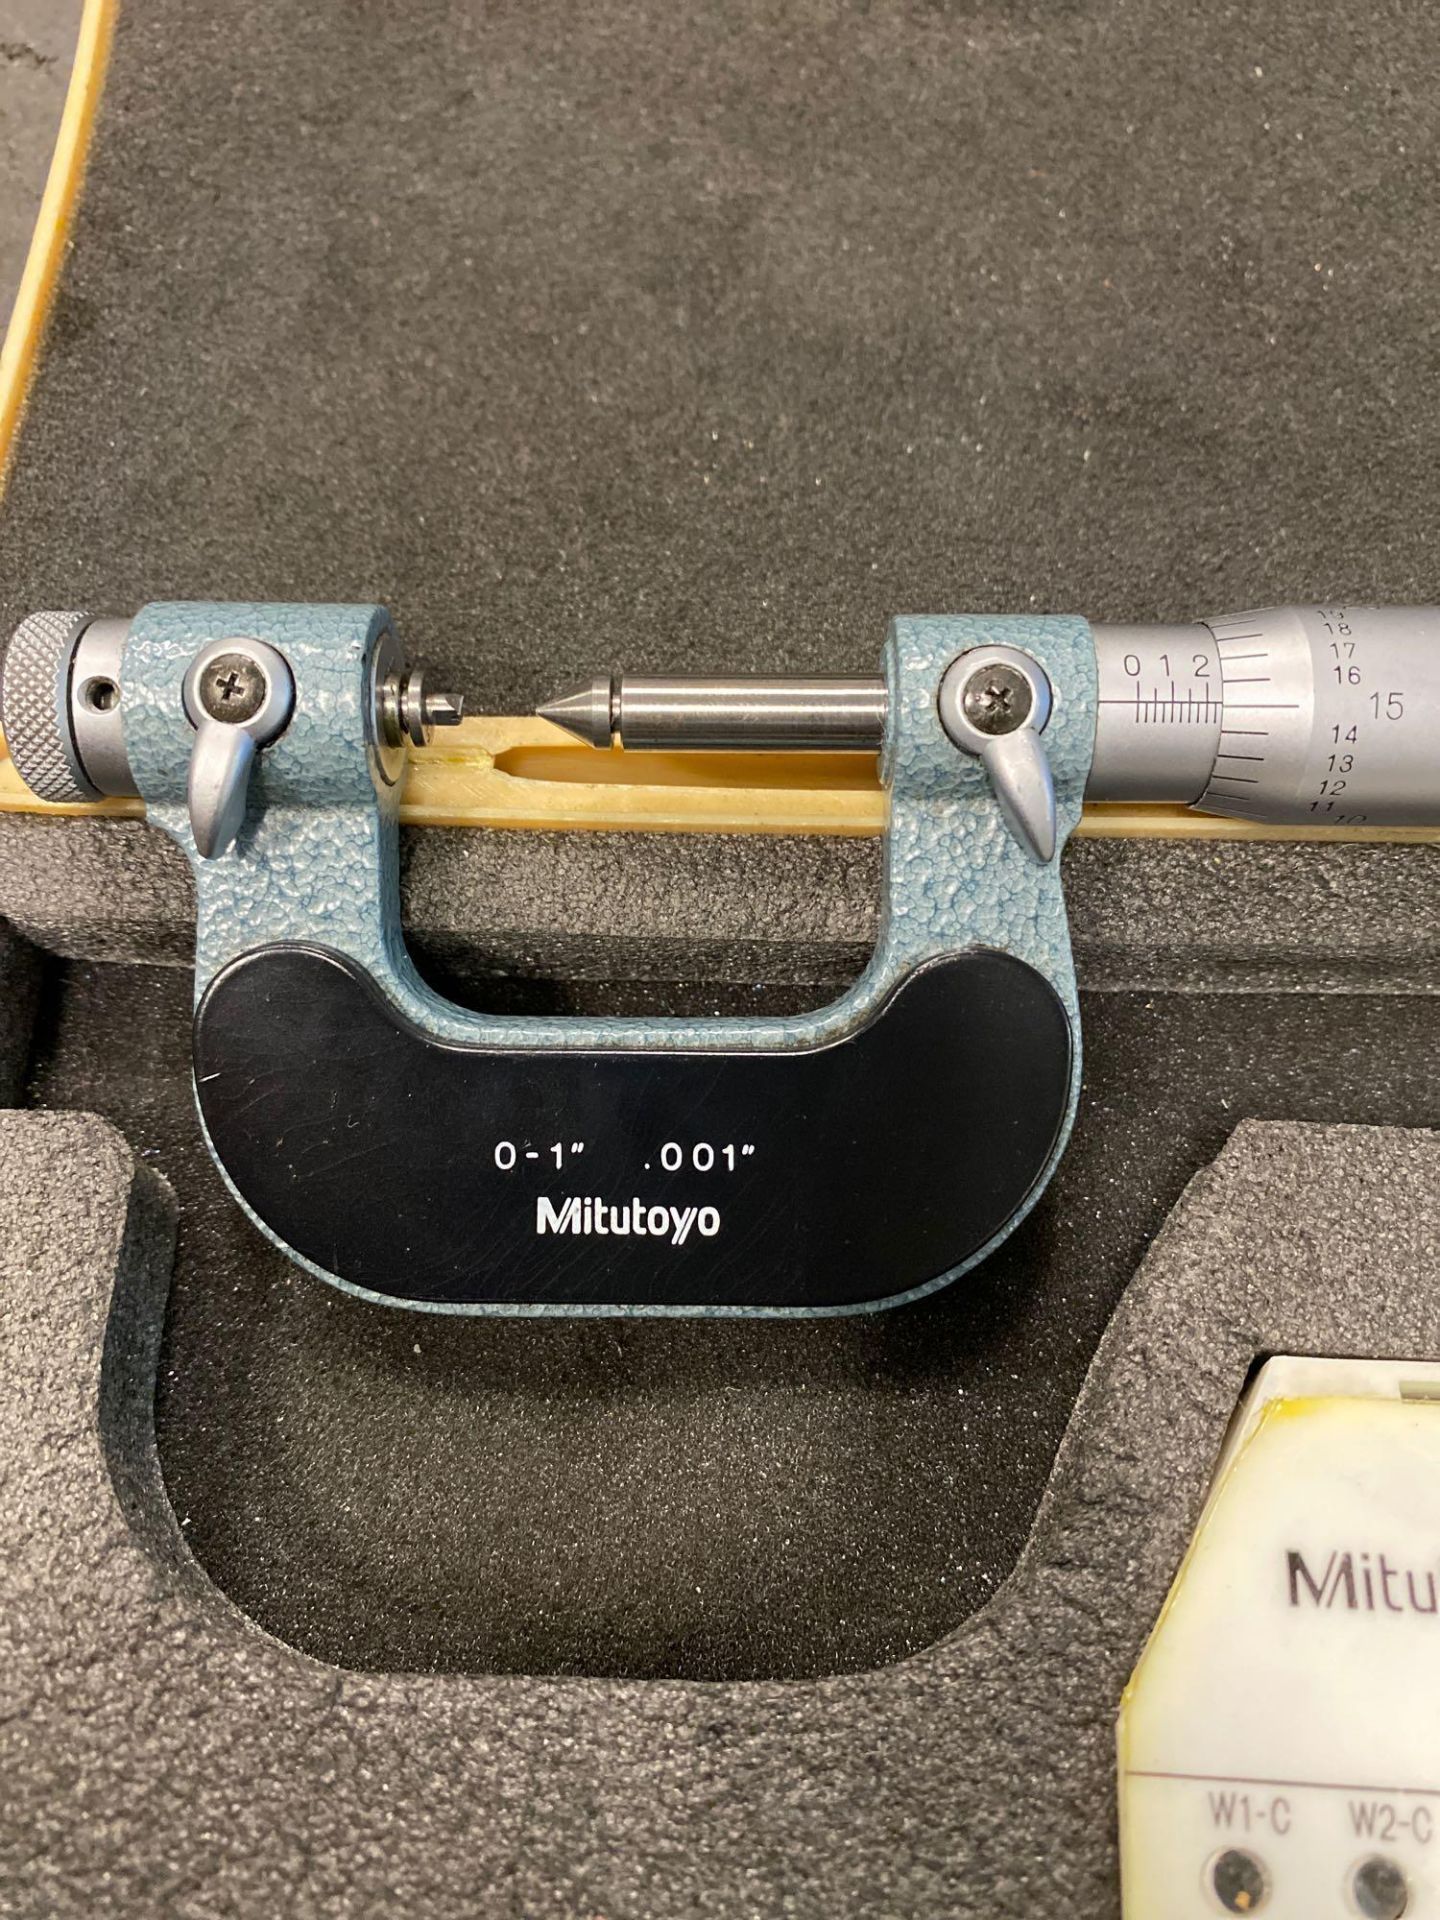 Mitutoyo 0-1” Screw Micrometer - Image 2 of 3